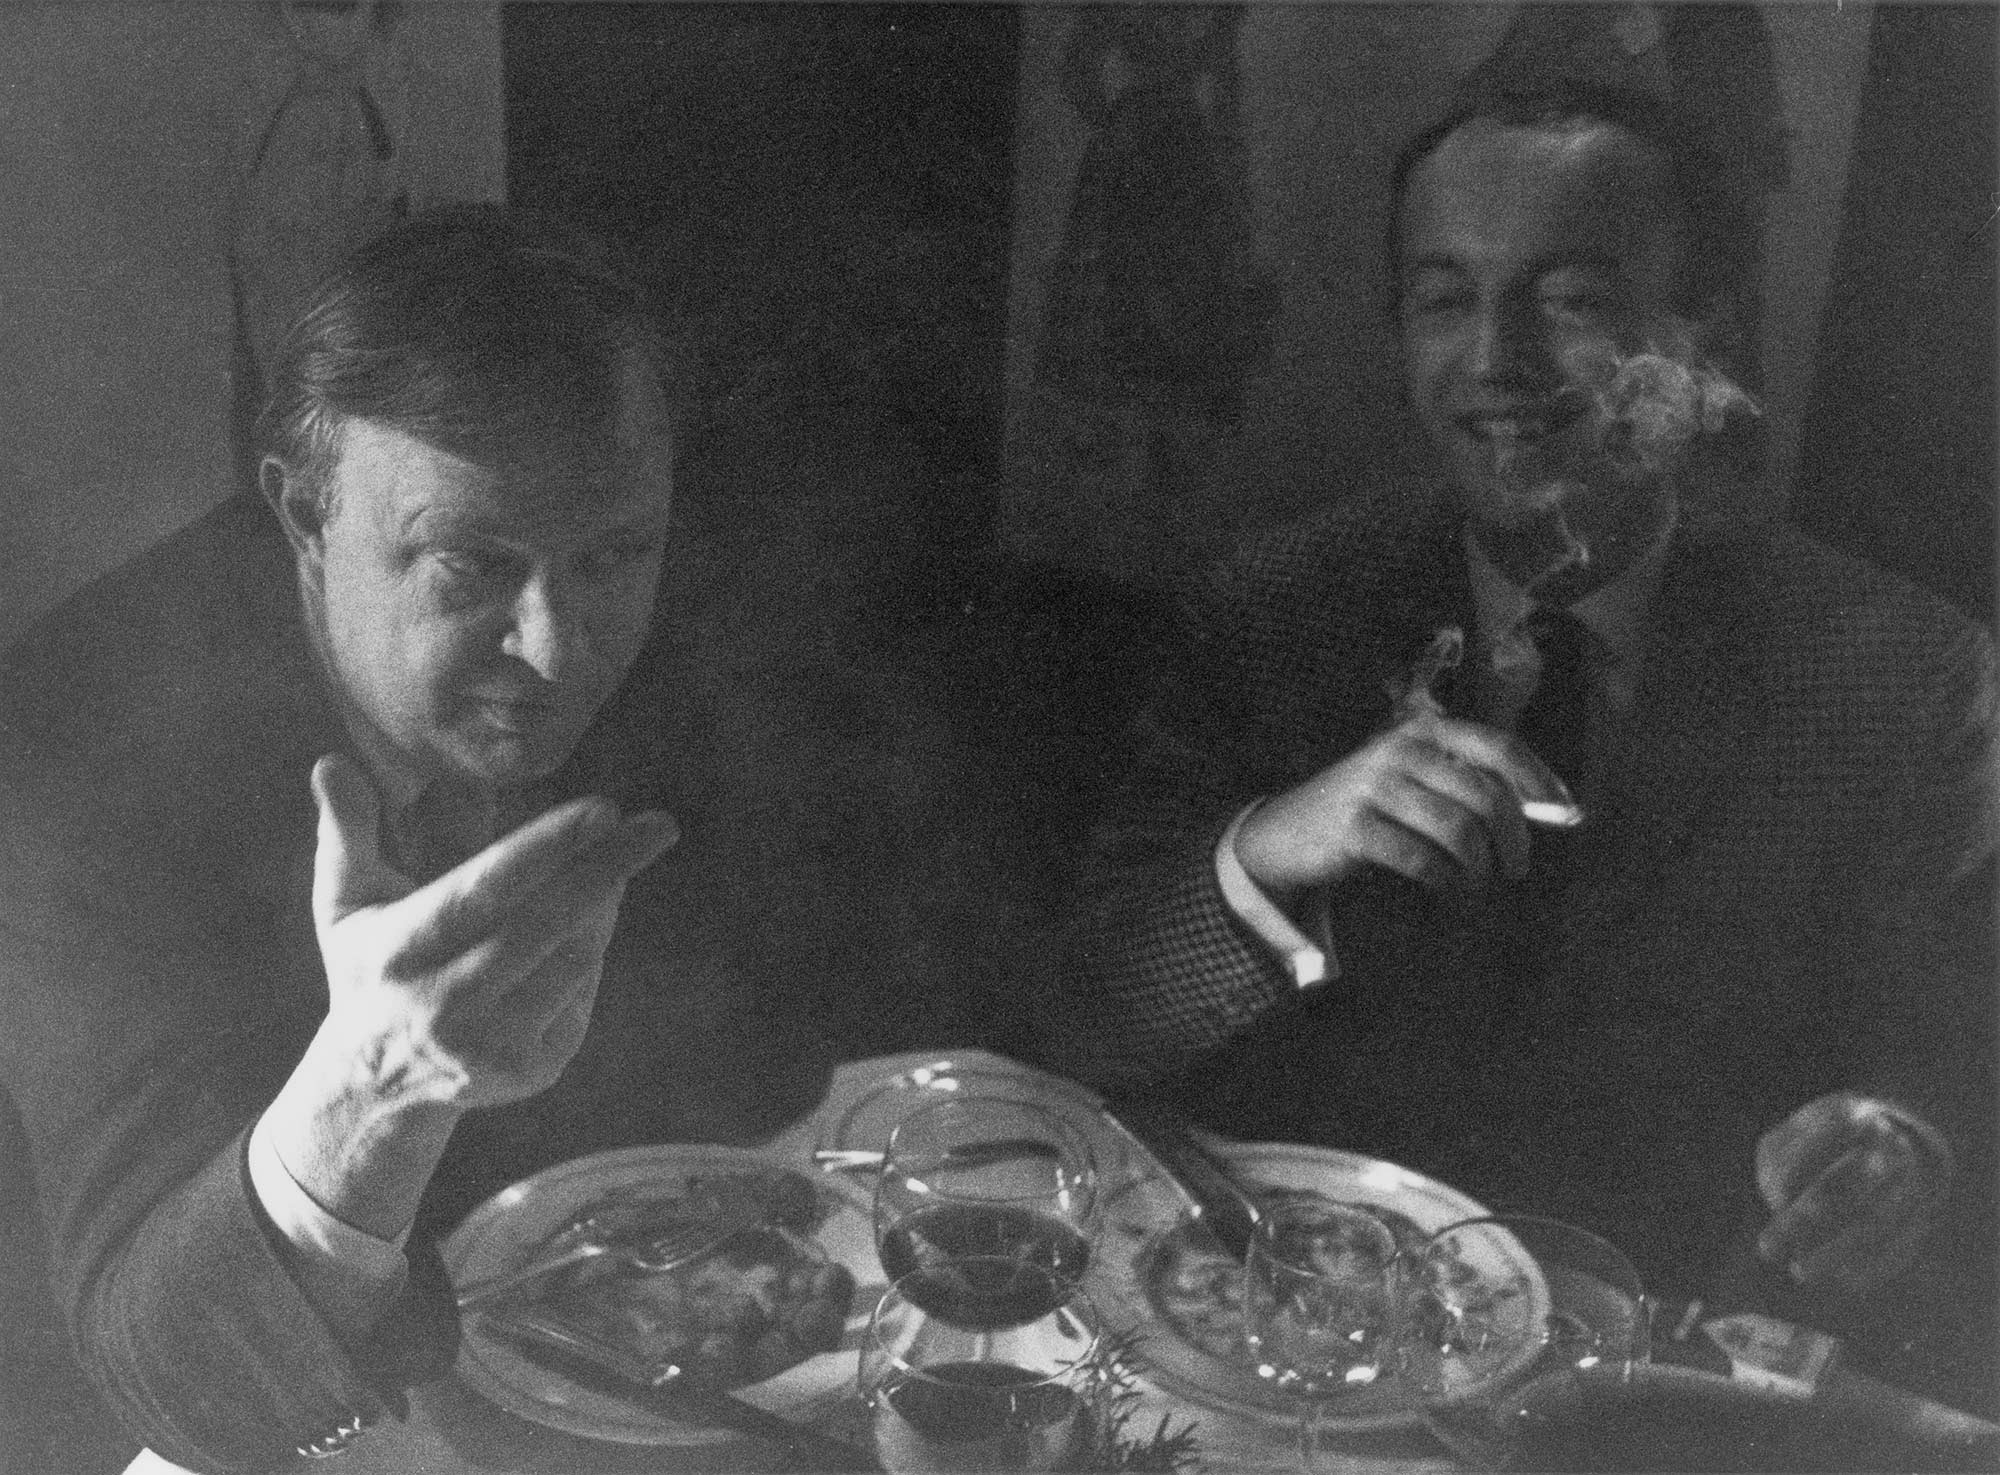 Motherwell and Frank O’Hara, 1965